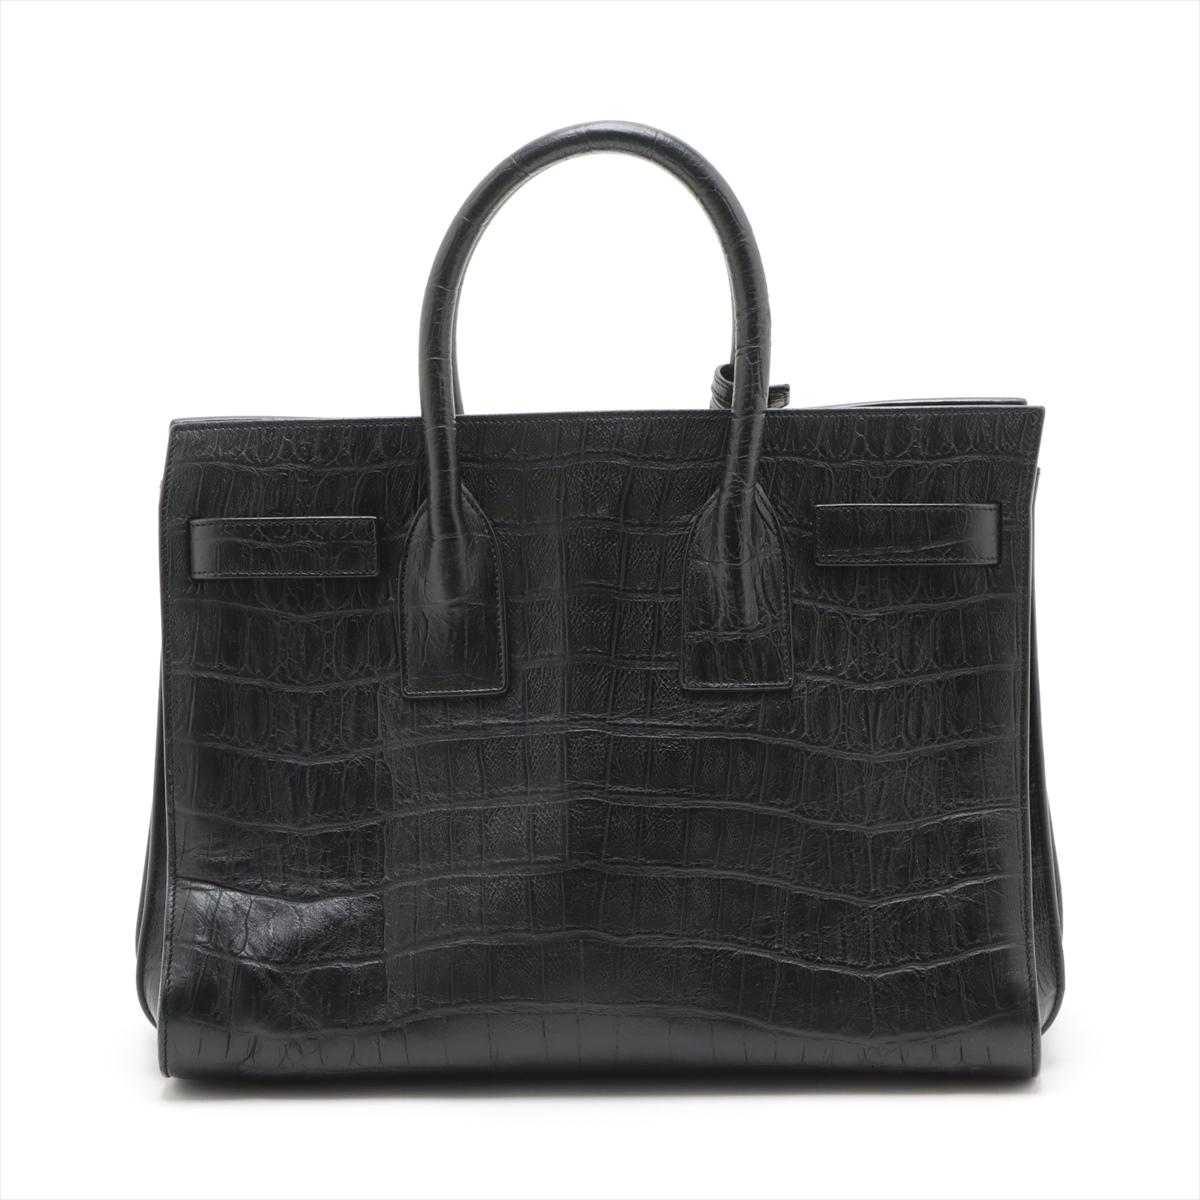 Saint Laurent Paris Sac de Jour Crocodile Embossed Leather Two-Way Handbag Black In Good Condition For Sale In Indianapolis, IN